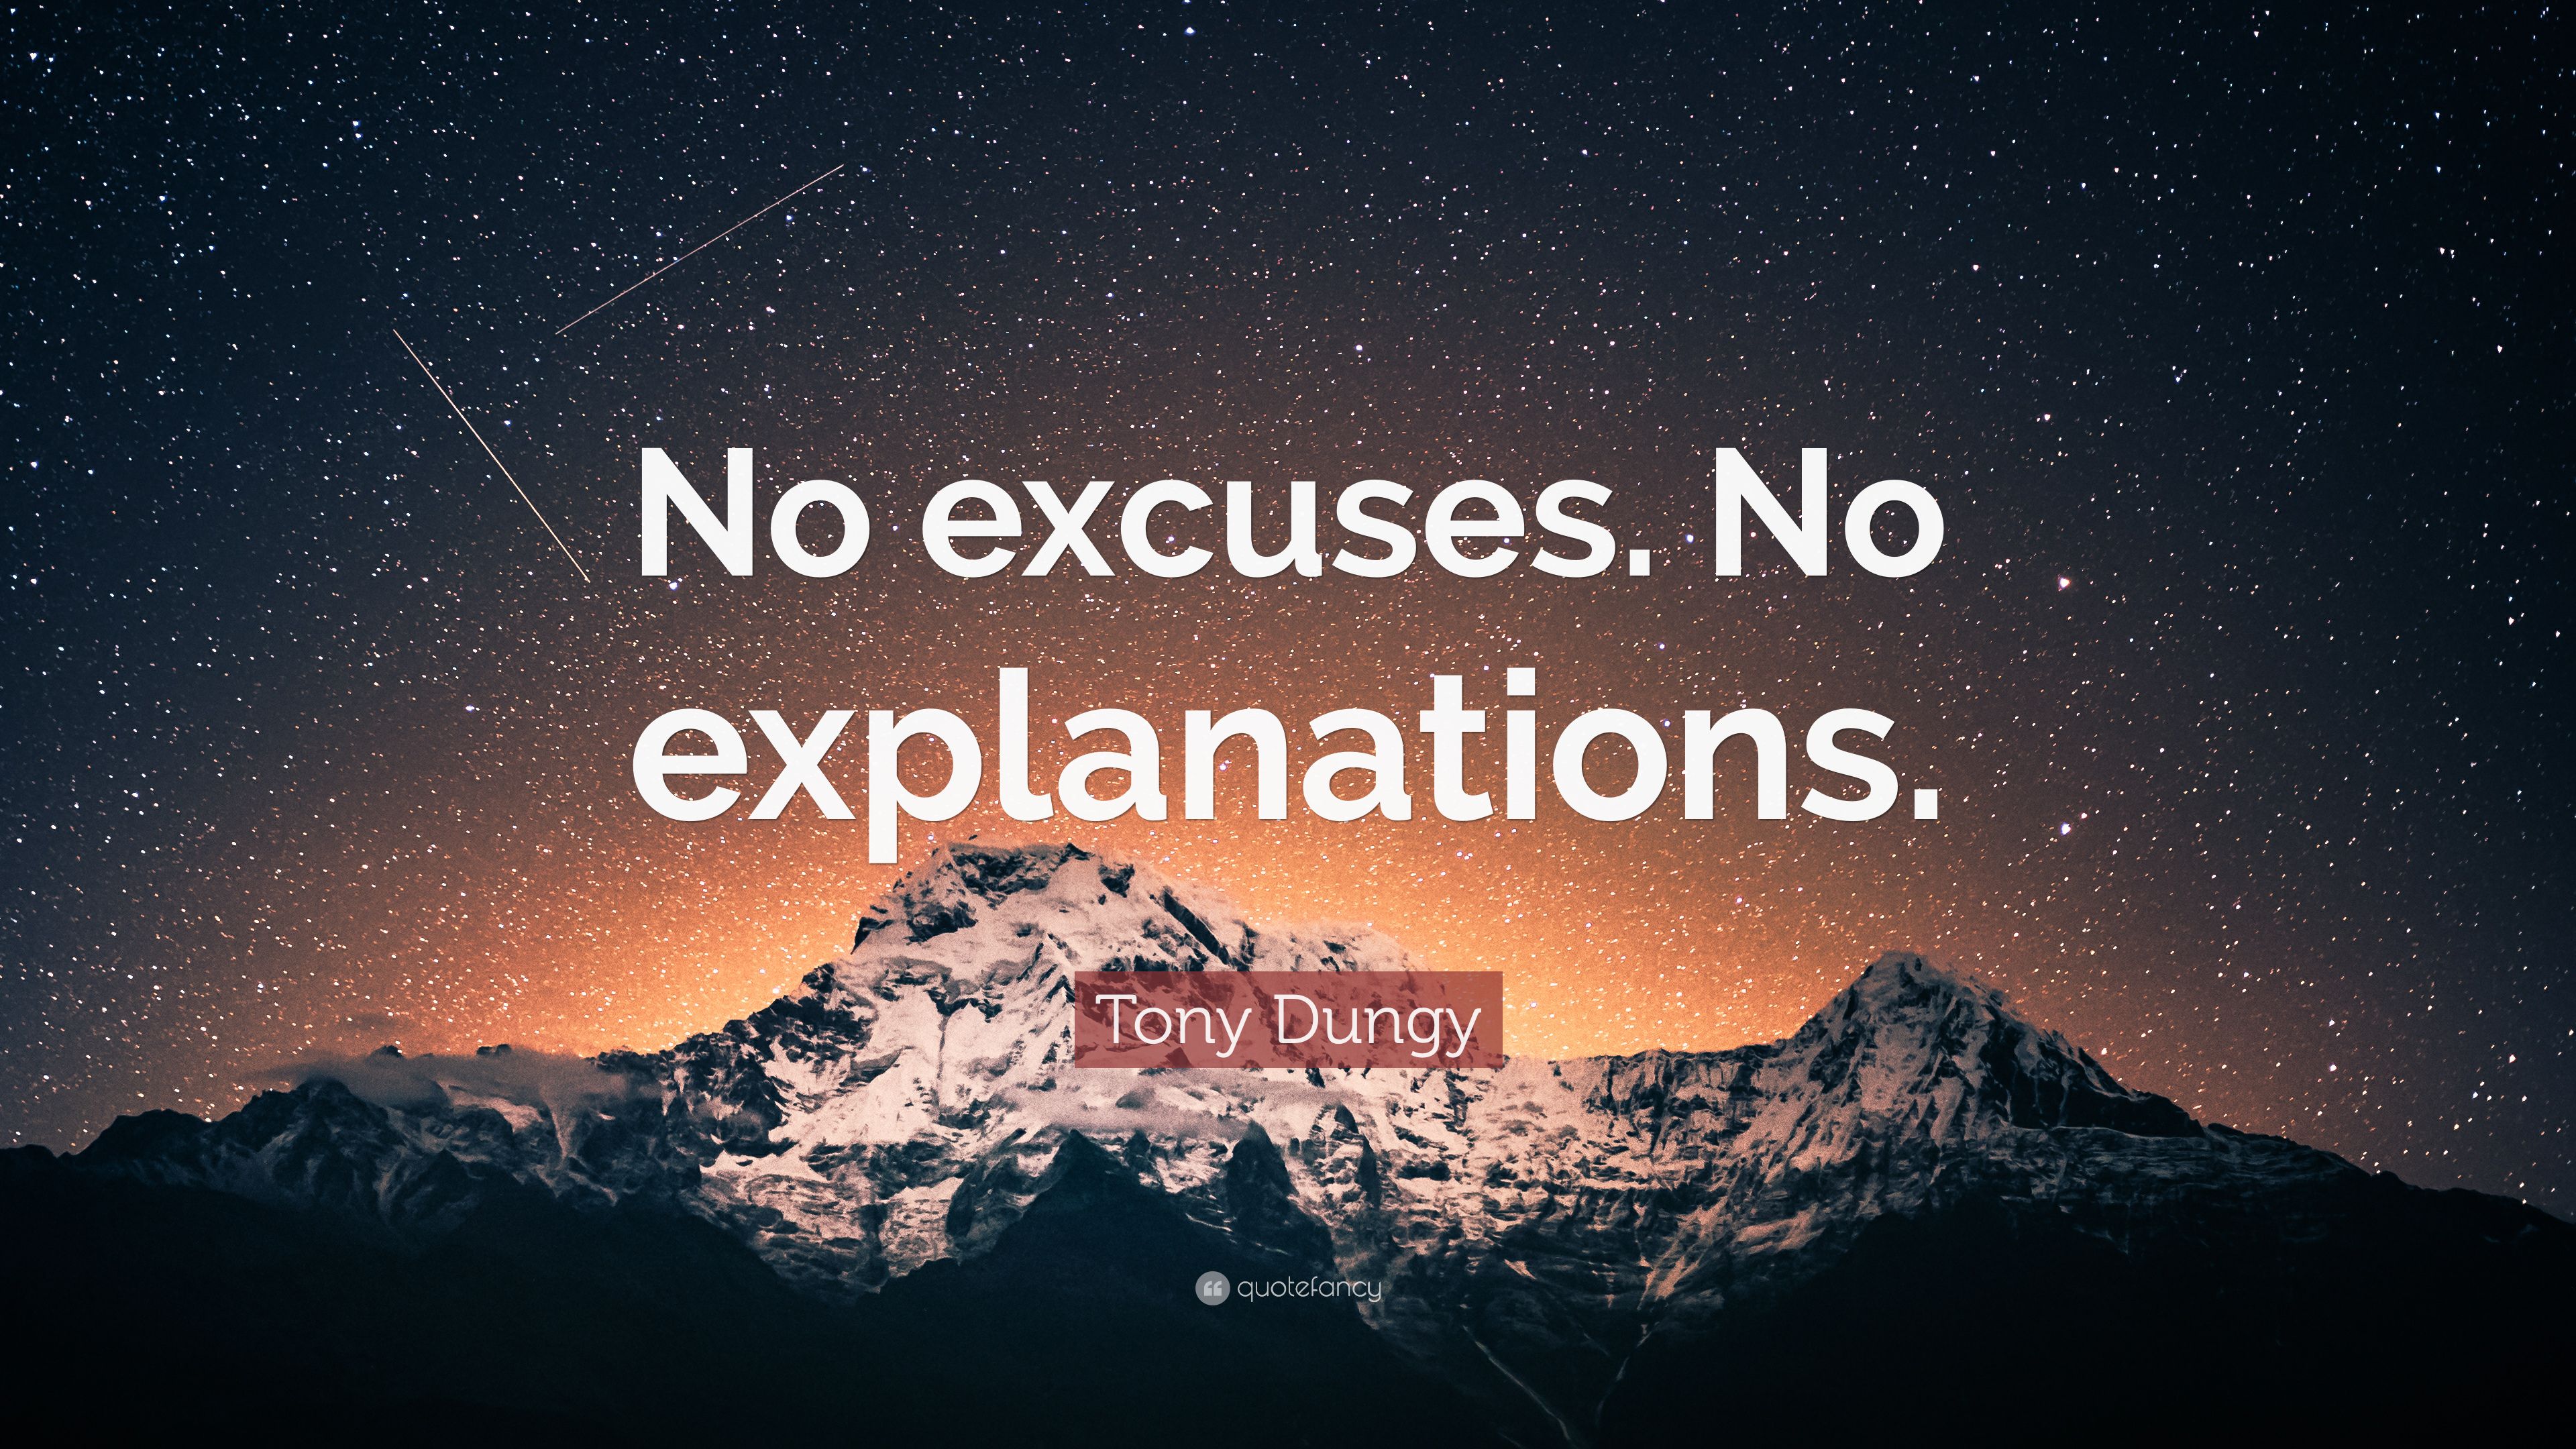 Tony Dungy Quote: “No excuses. No explanations.” (7 wallpaper)